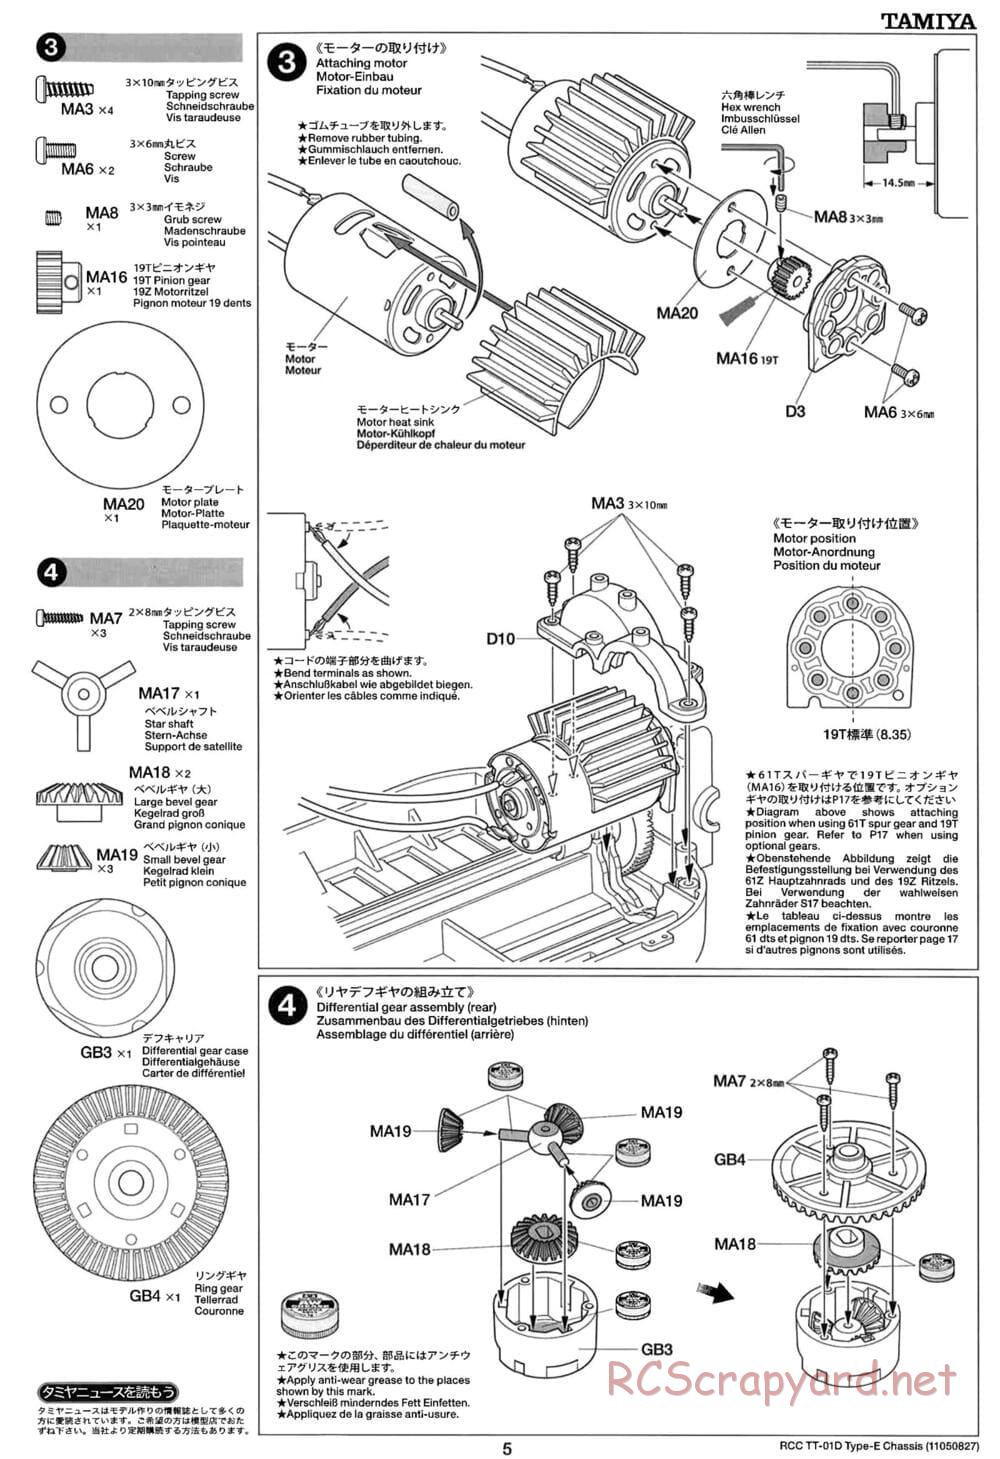 Tamiya - TT-01D Type-E (TT-01ED) - Drift Spec Chassis - Manual - Page 5